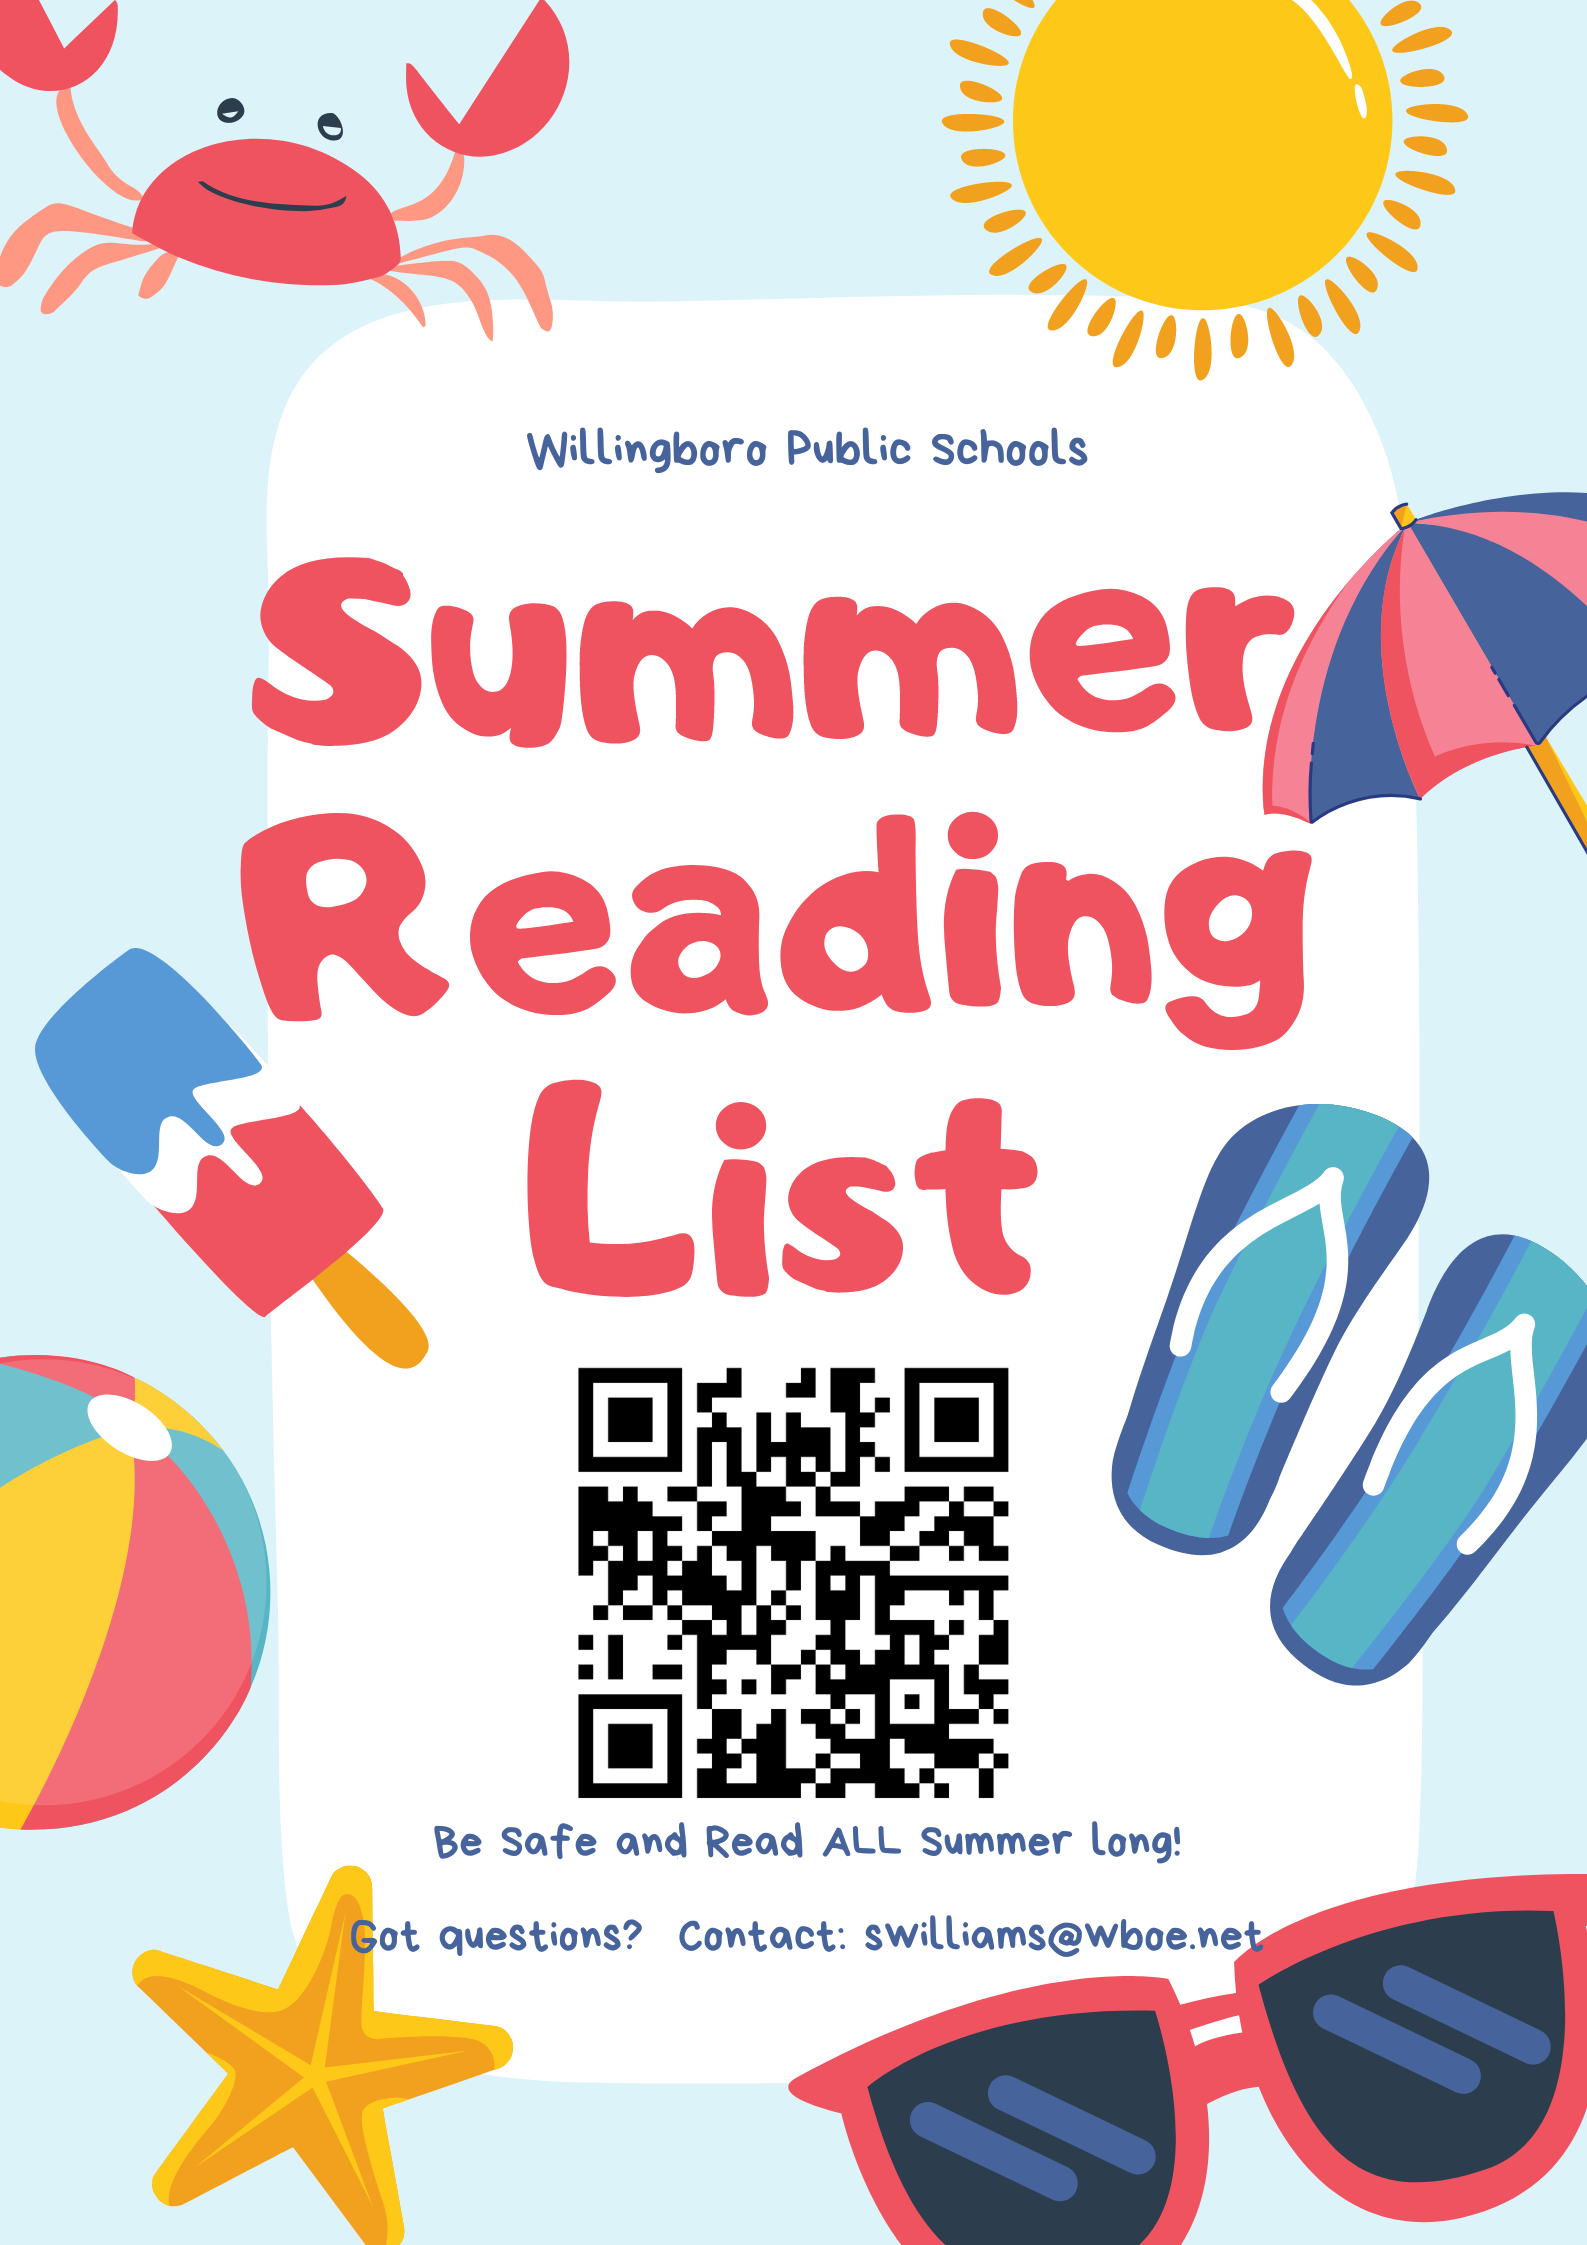 image of Summer Reading list